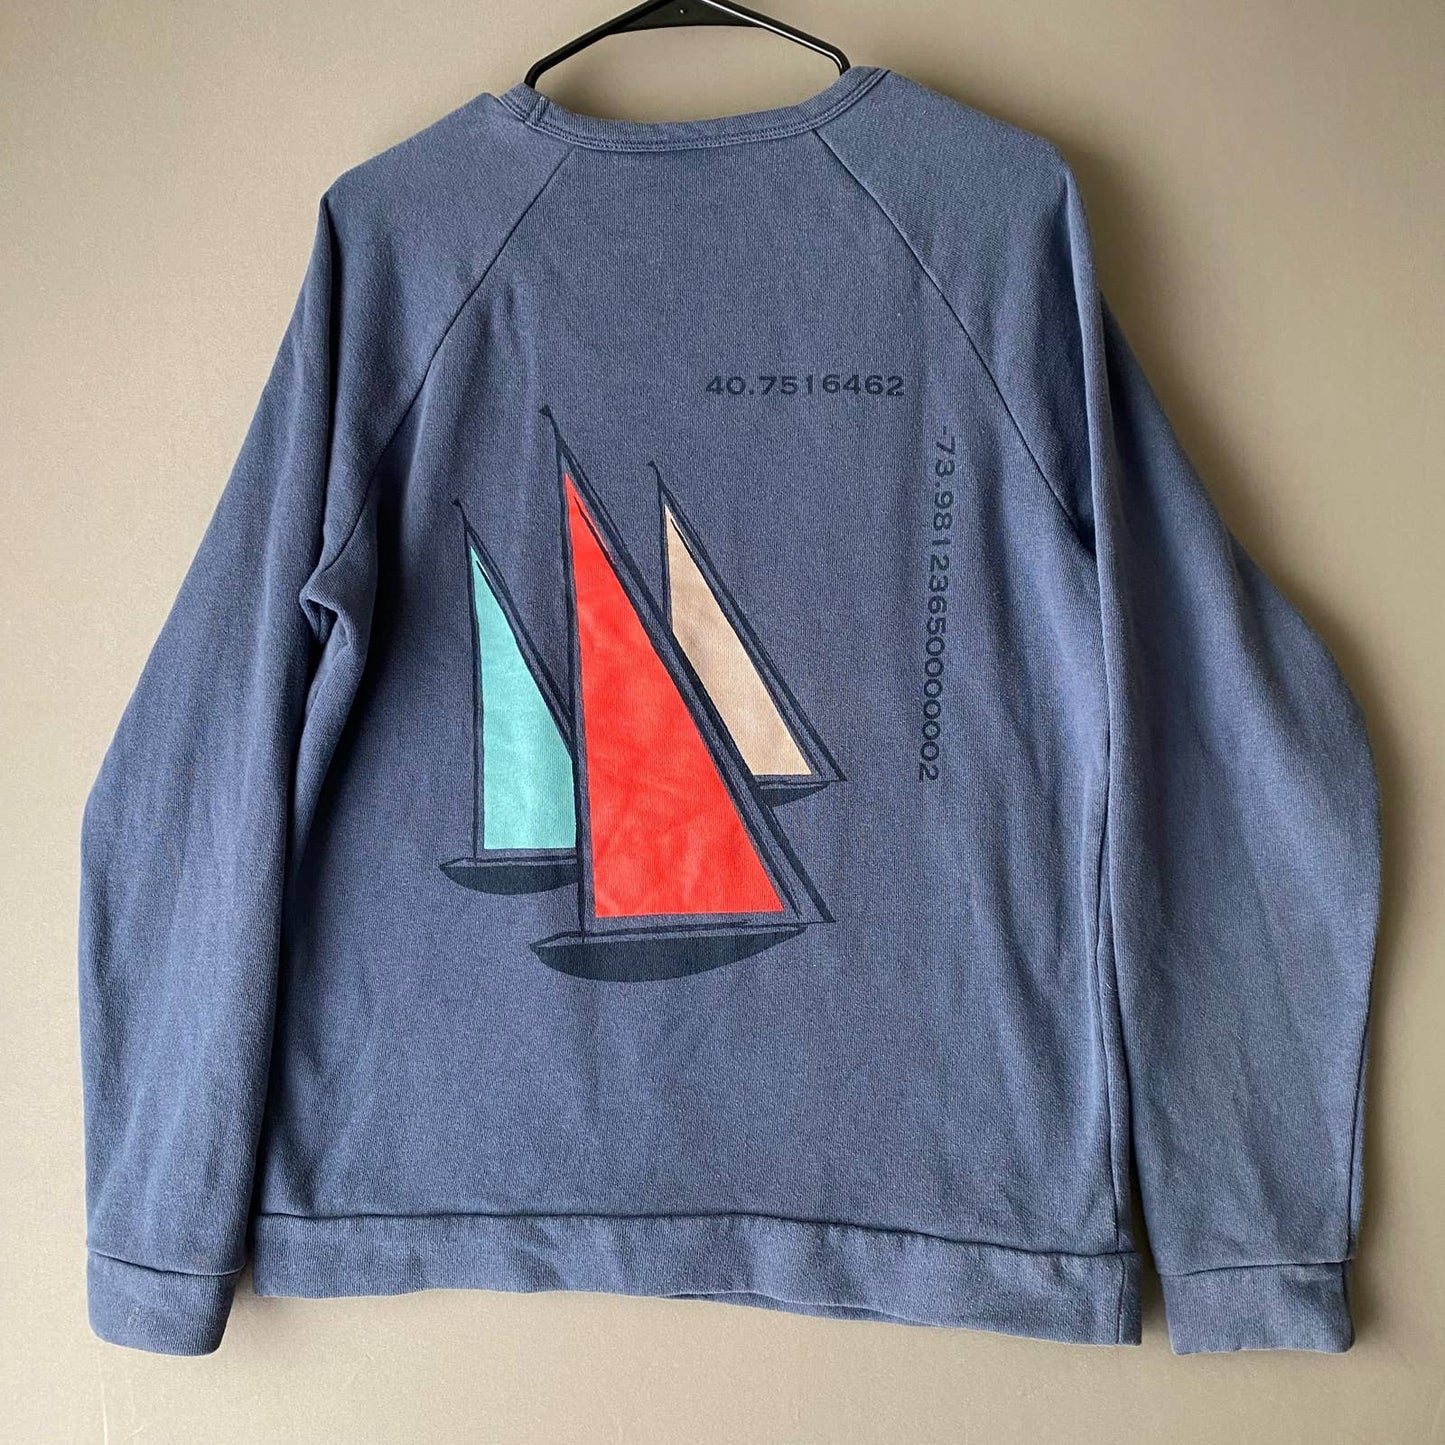 Onia sz M nautical cotton sail boat sweatshirt